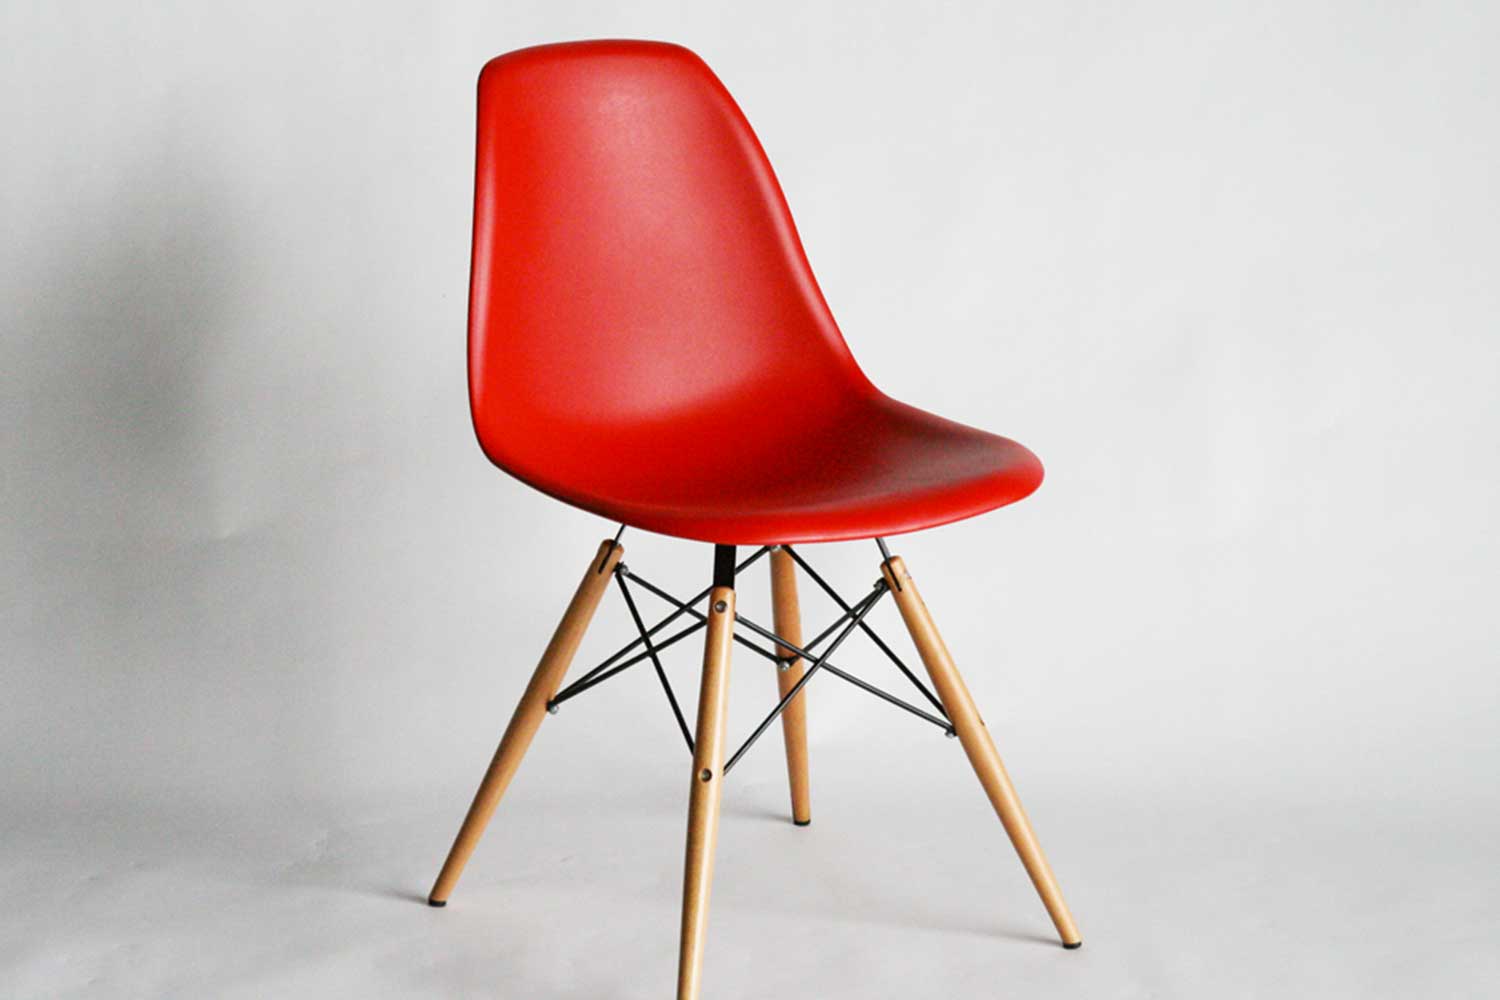 HermanMiller Eames Shell chair